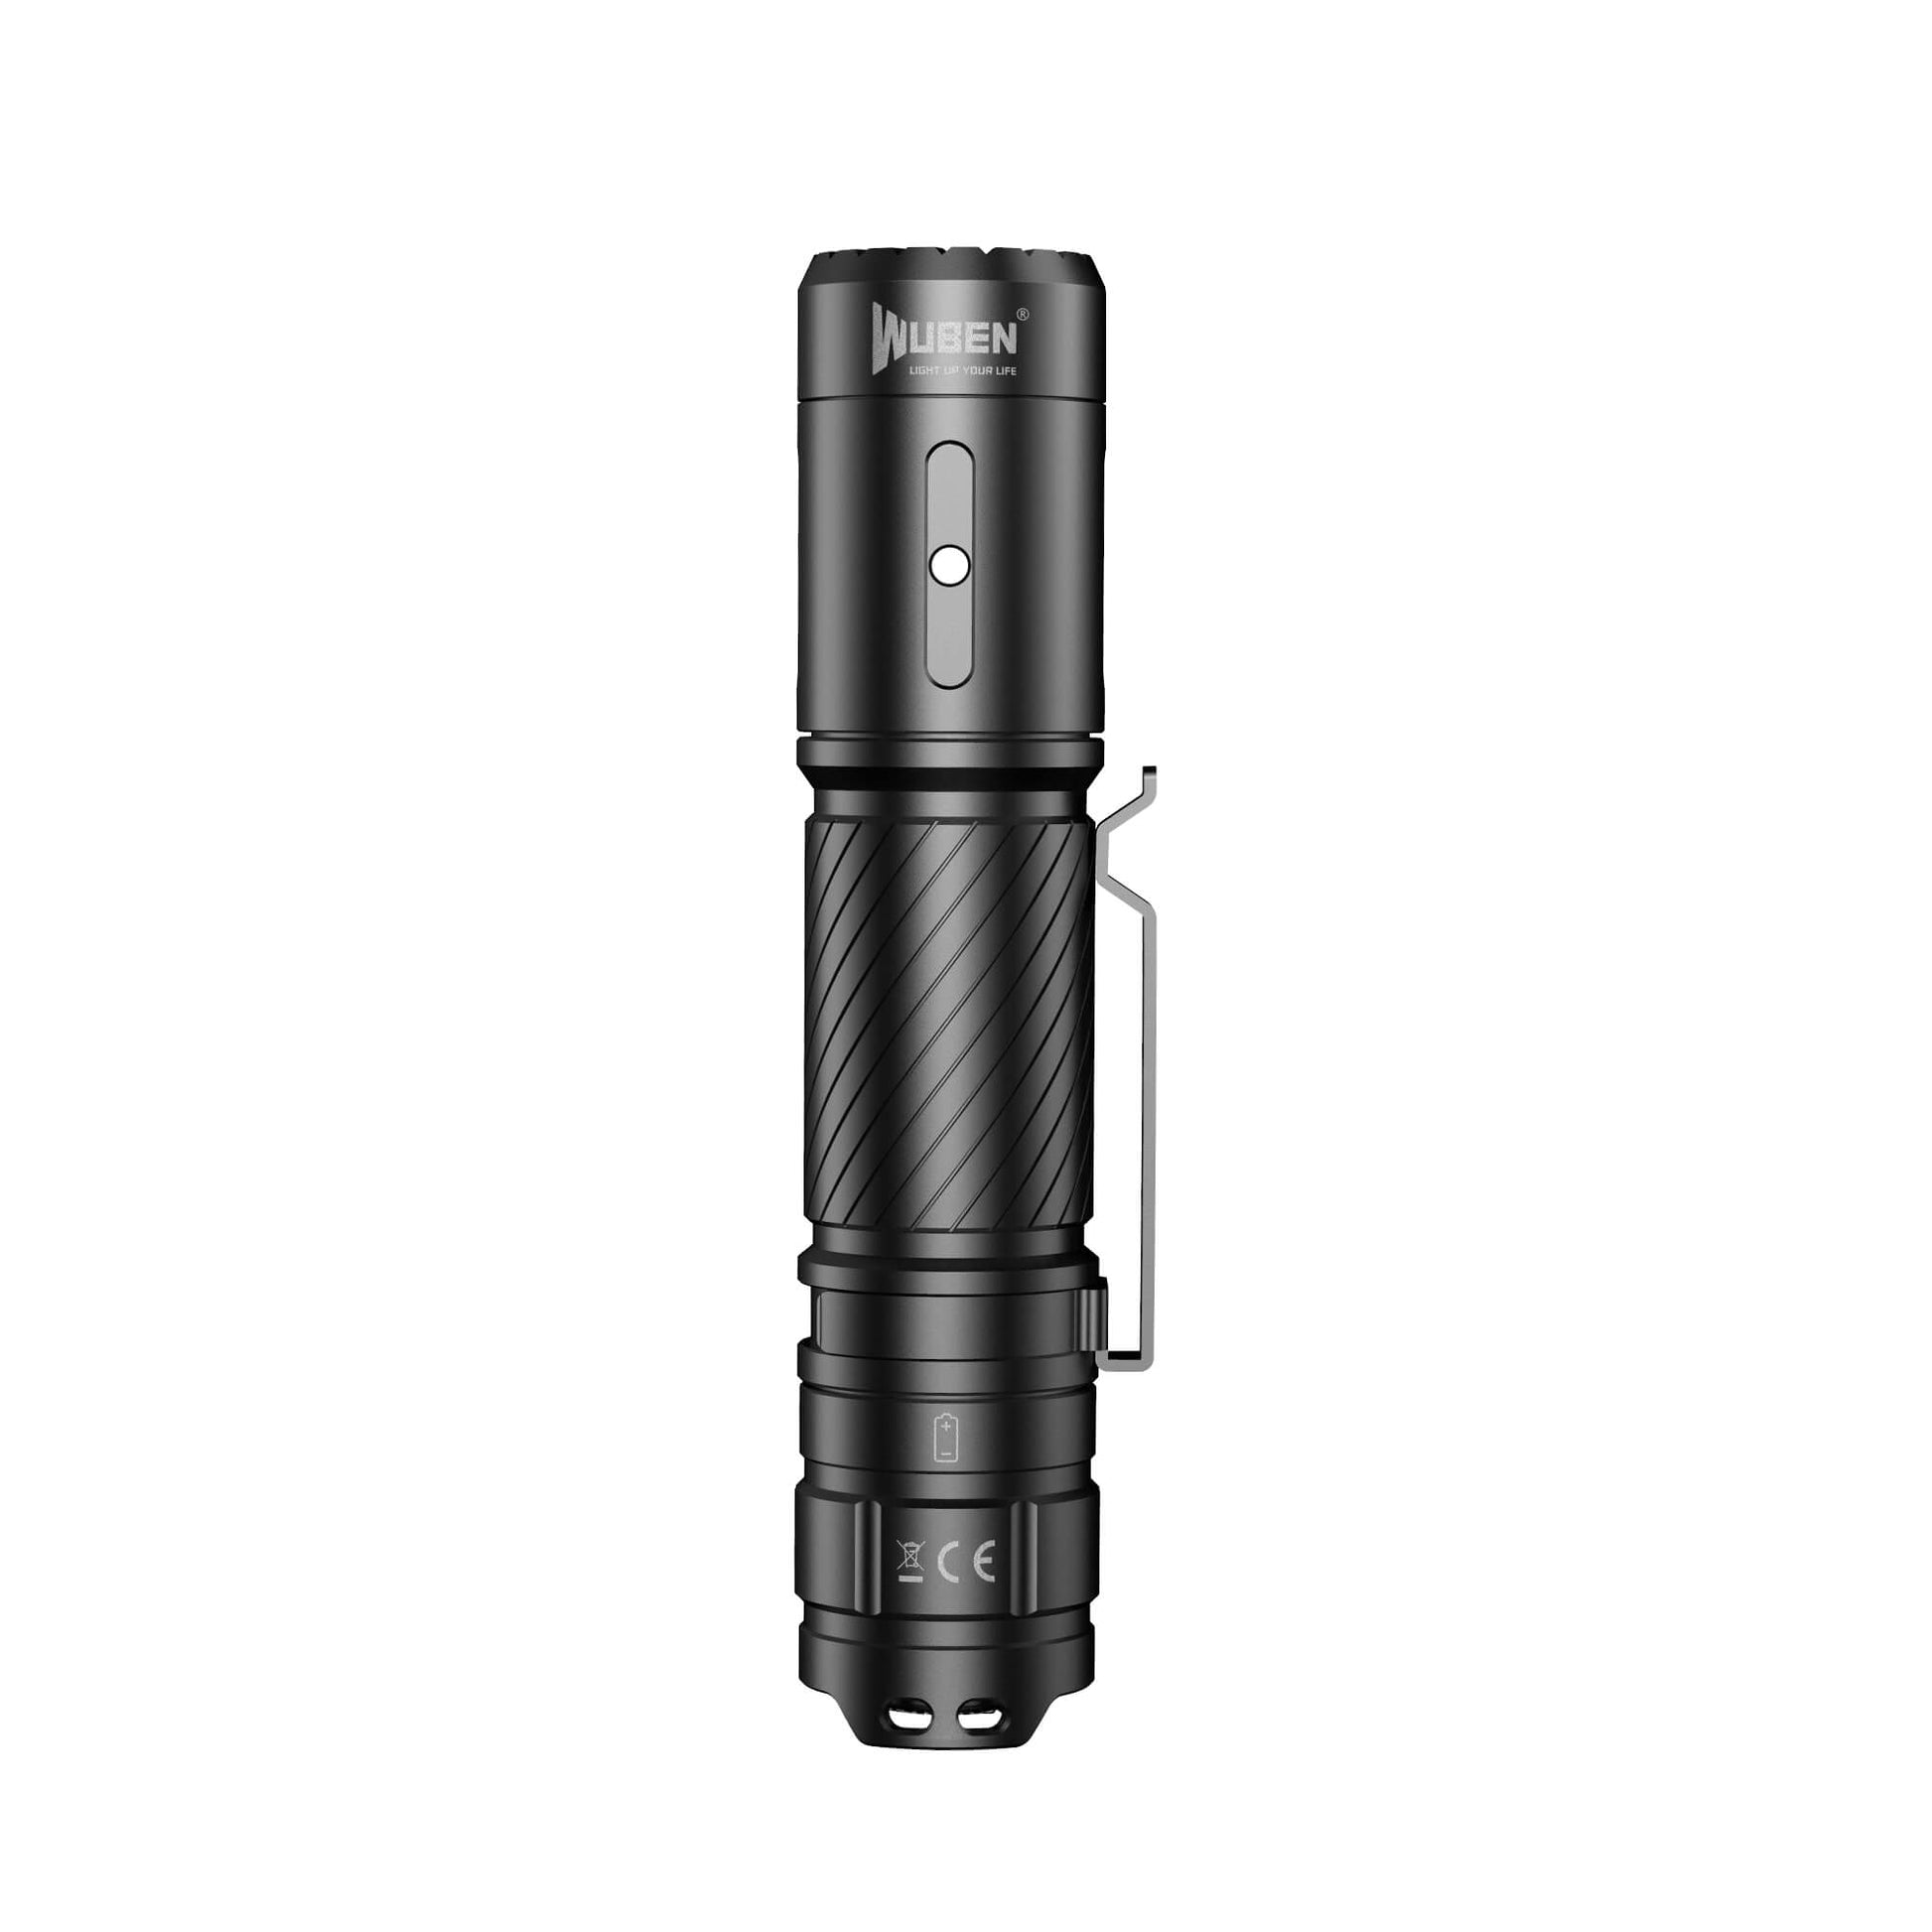 Wuben C3 1200 Lumen Flashlight - High-Quality, Compact Light under 30